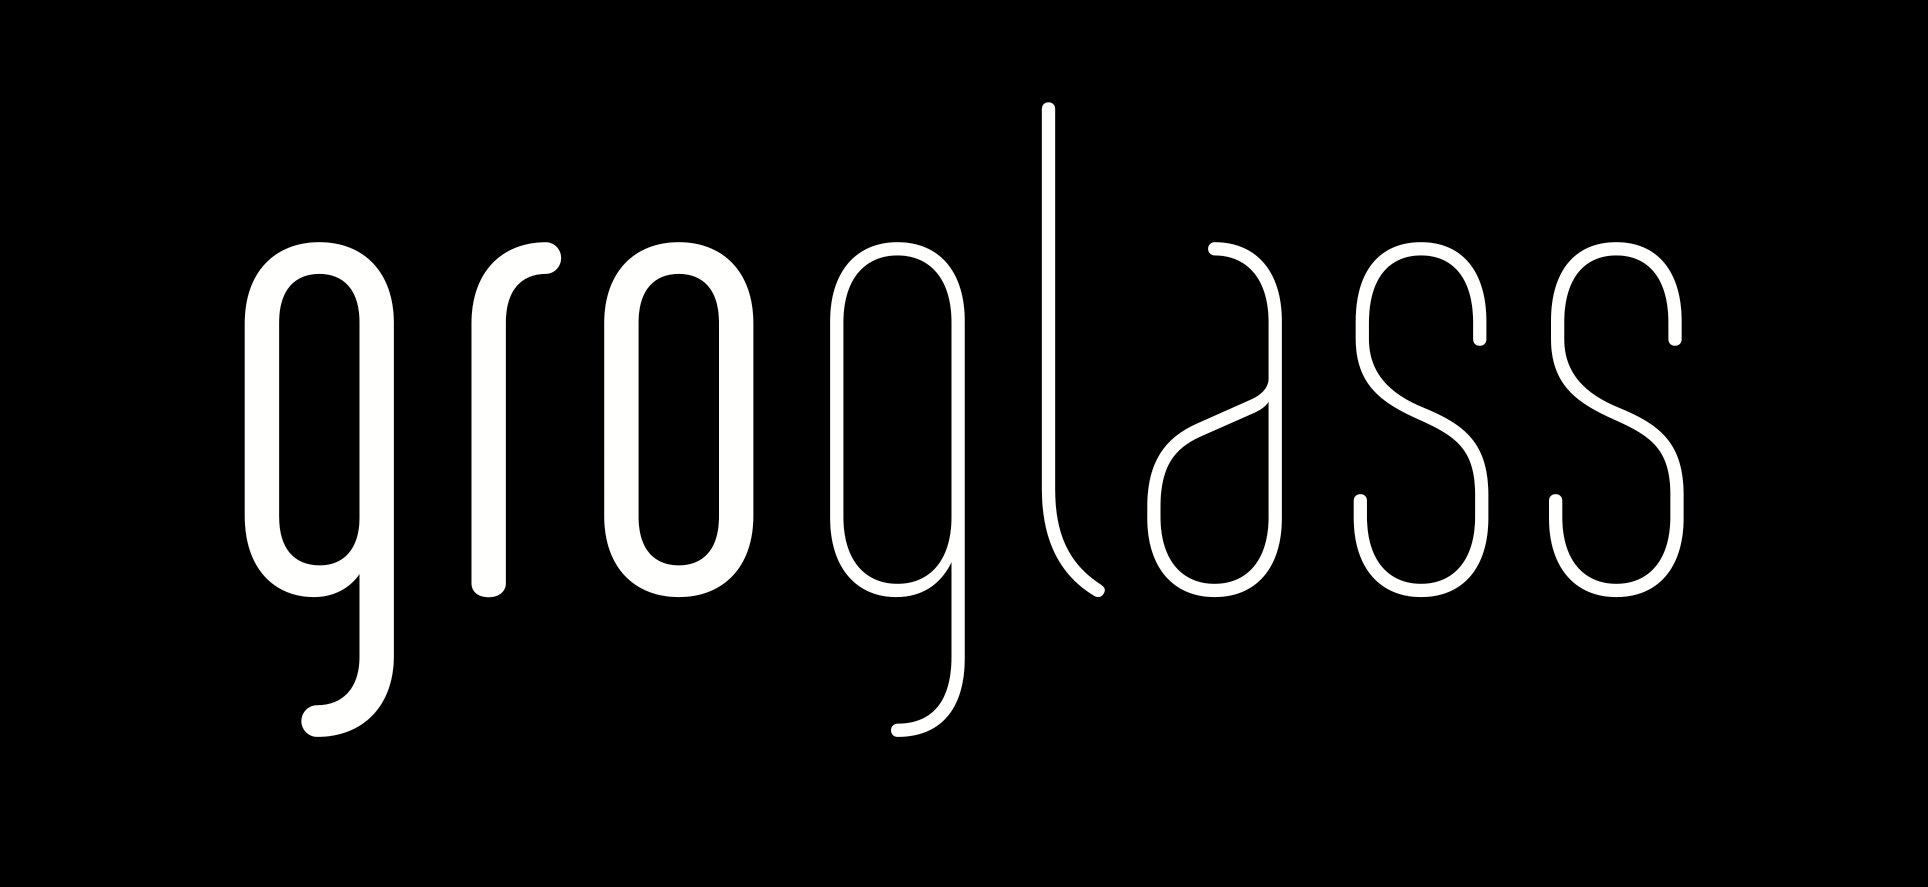 Groglass